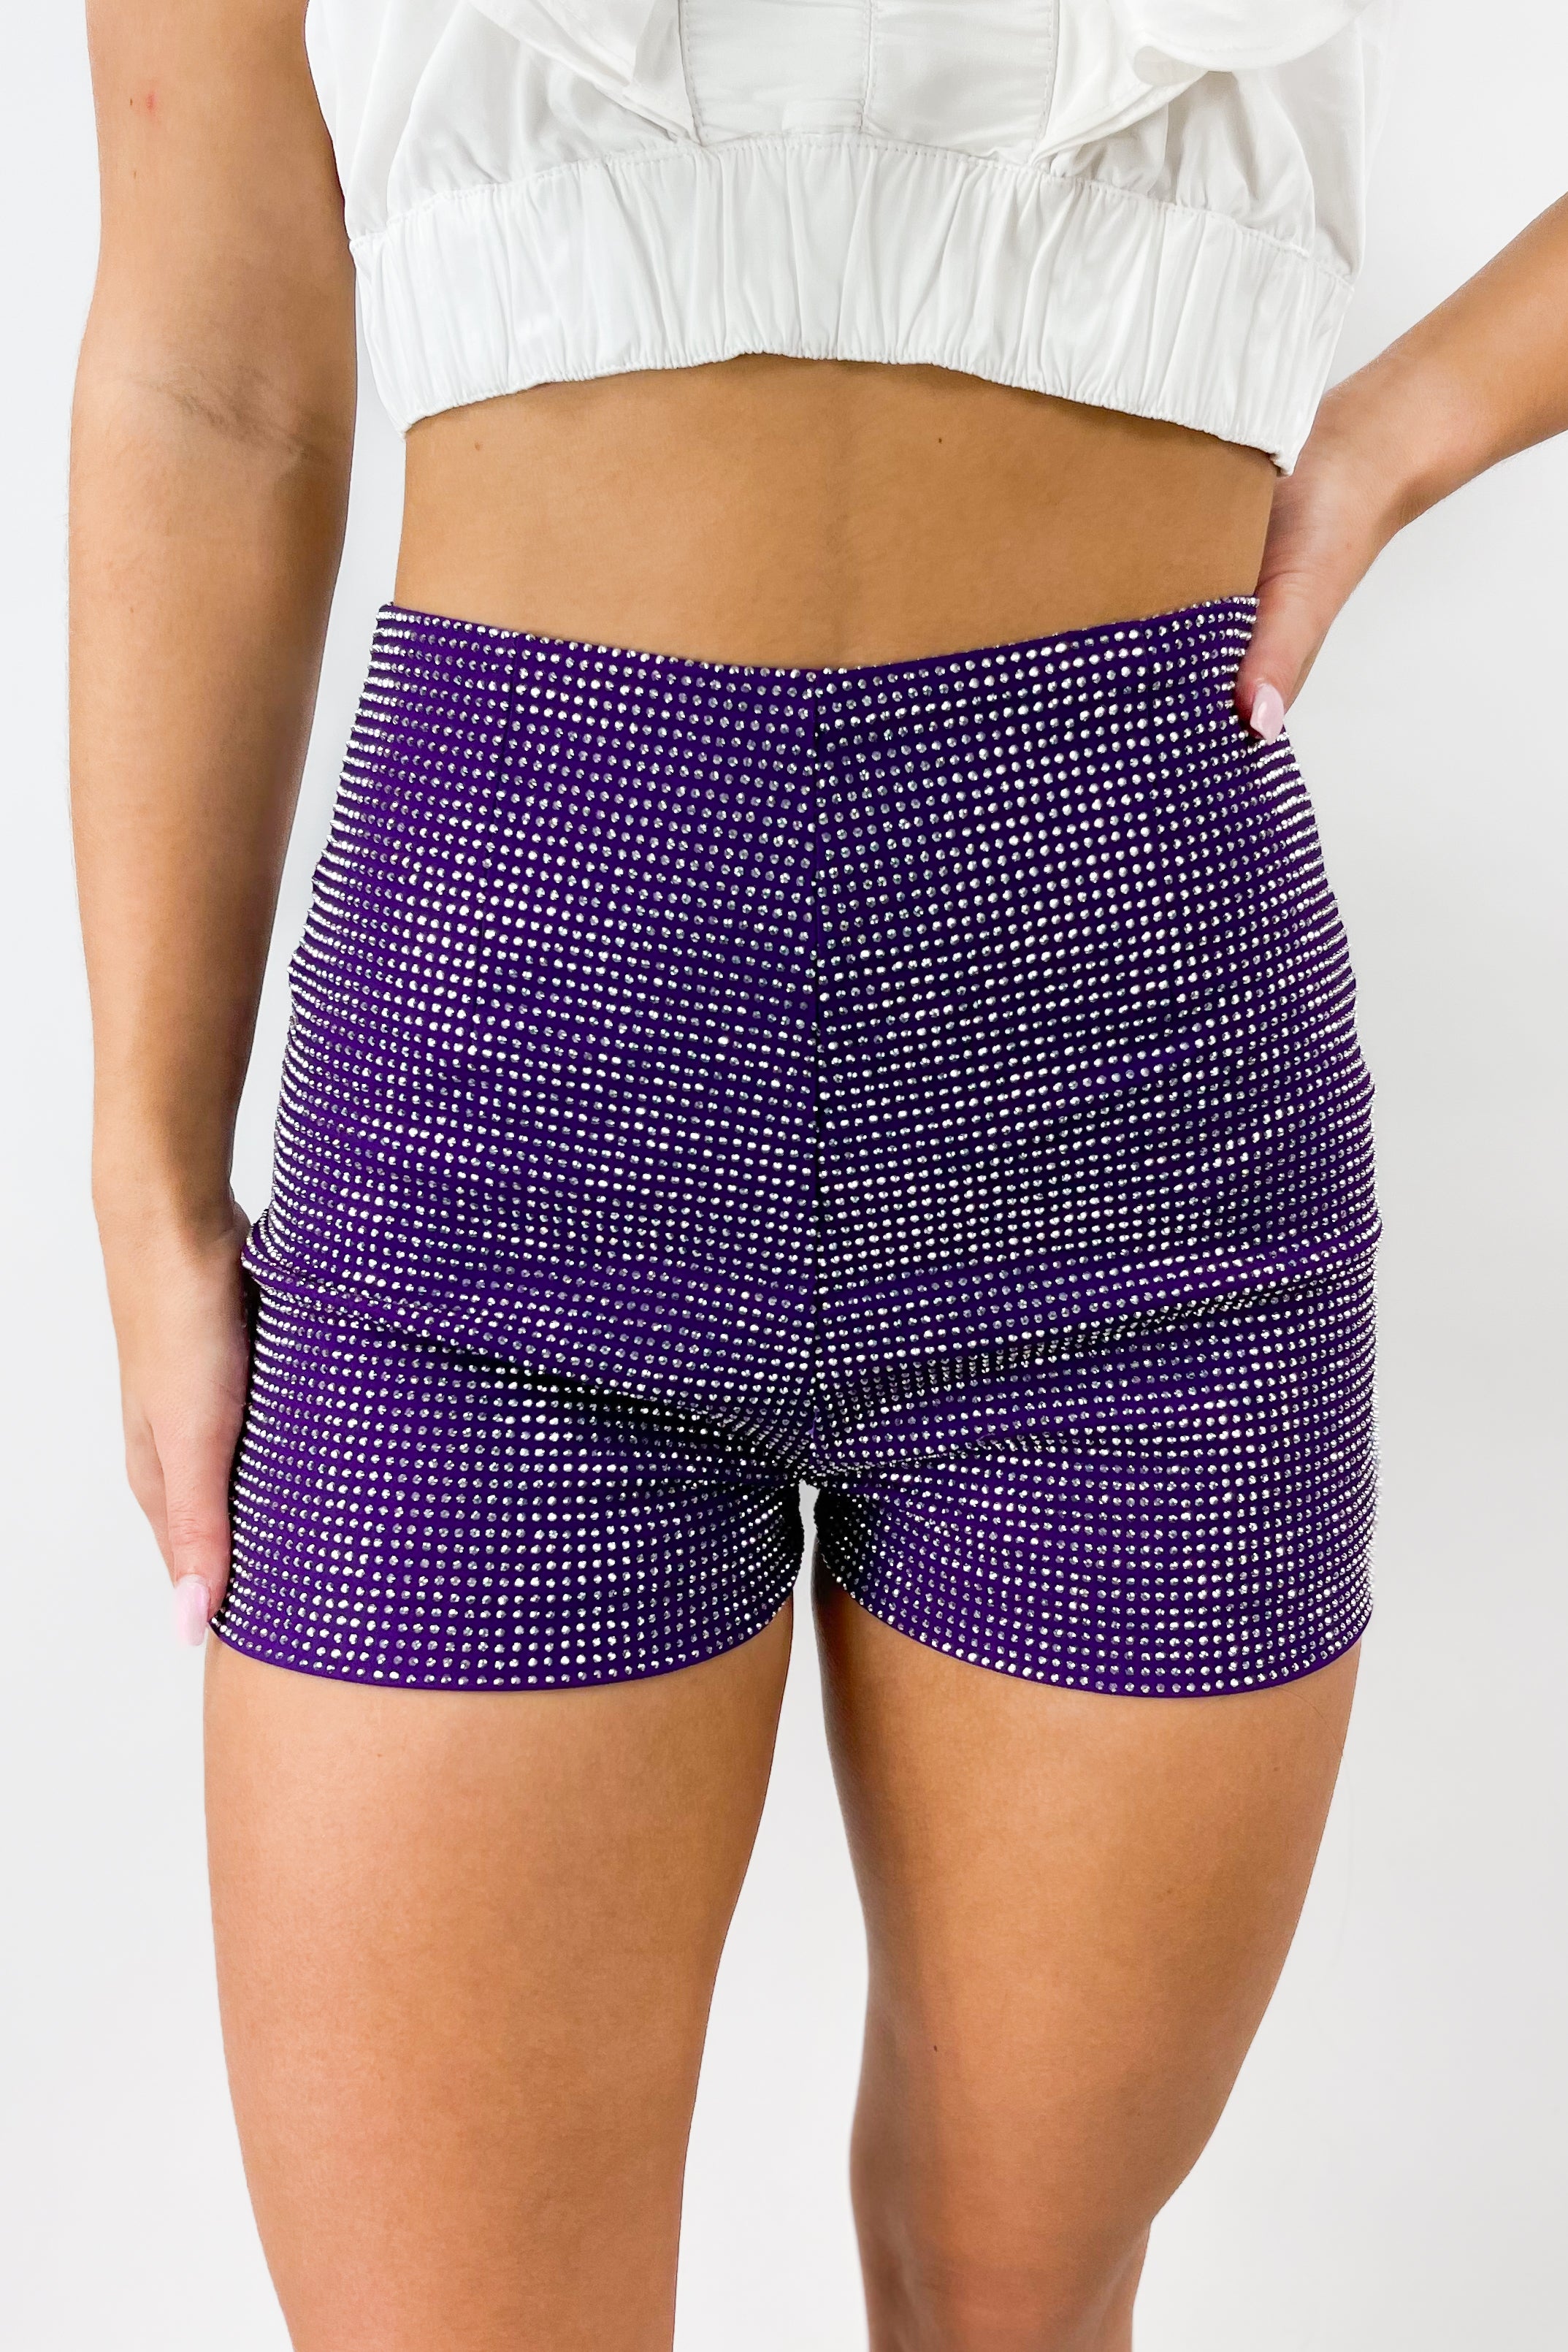 Frock Candy Rhinestone Cowgirl Shorts in Purple Purple / S